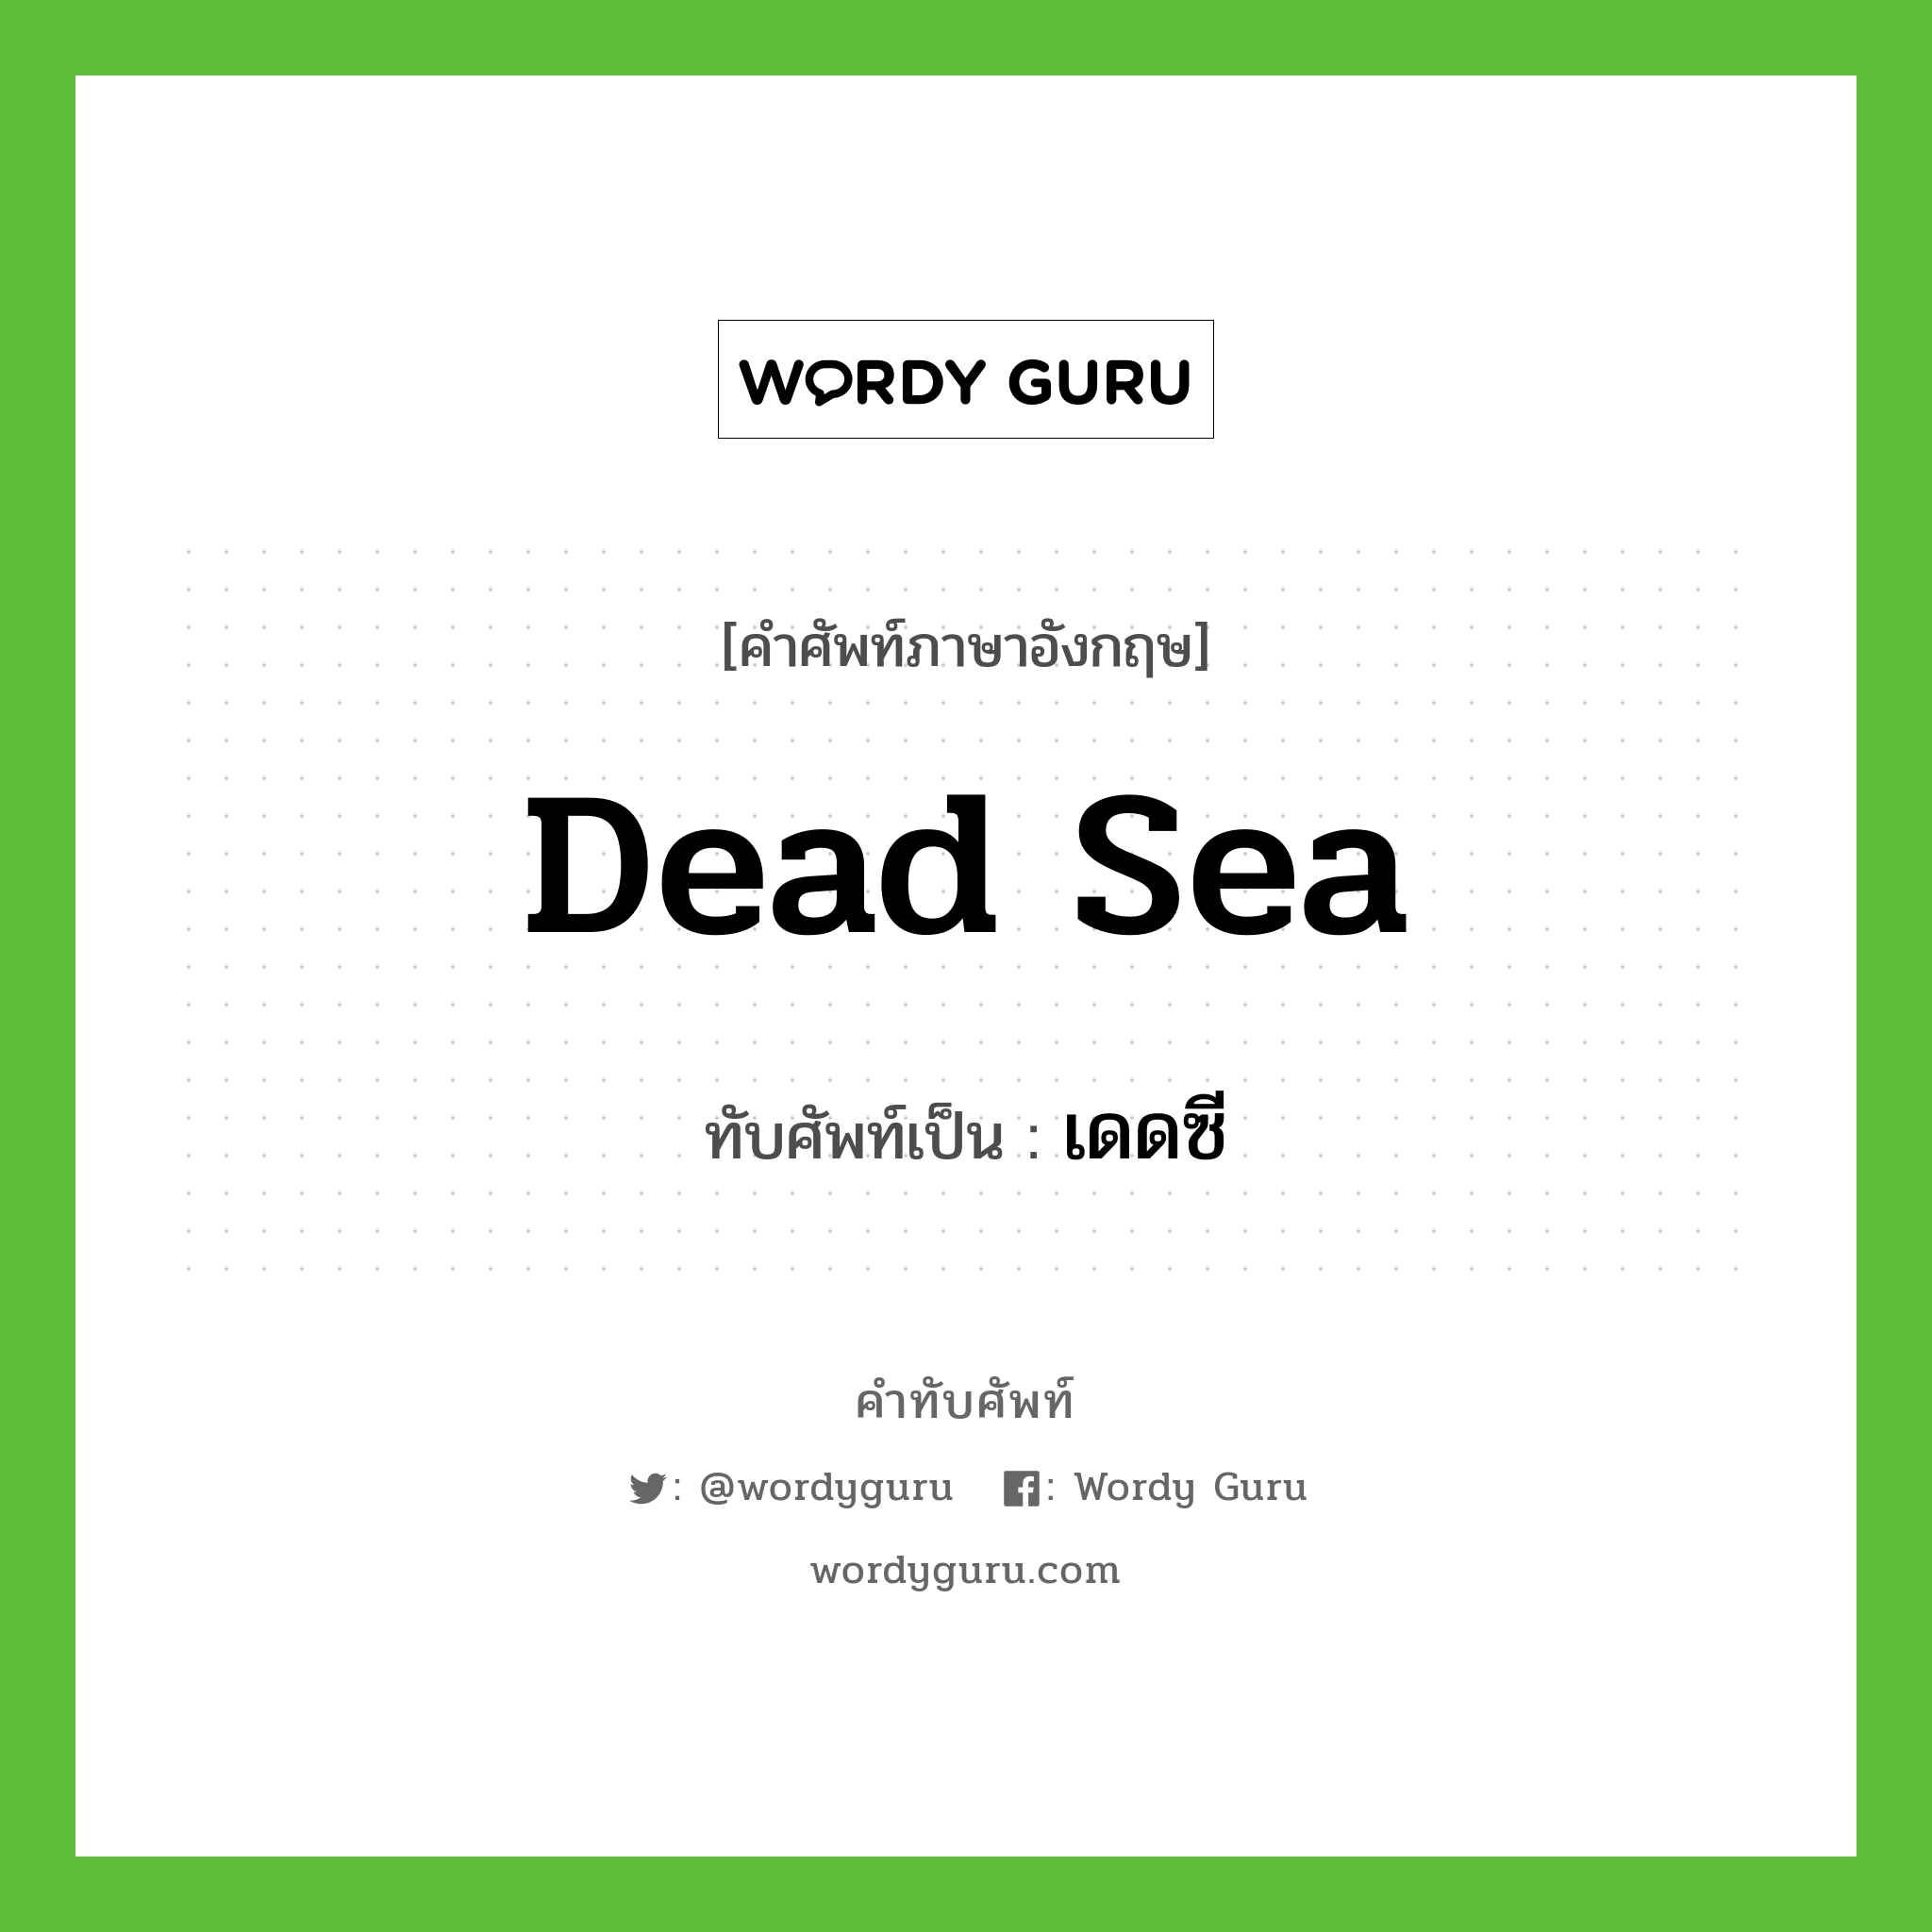 Dead Sea เขียนเป็นคำไทยว่าอะไร?, คำศัพท์ภาษาอังกฤษ Dead Sea ทับศัพท์เป็น เดดซี